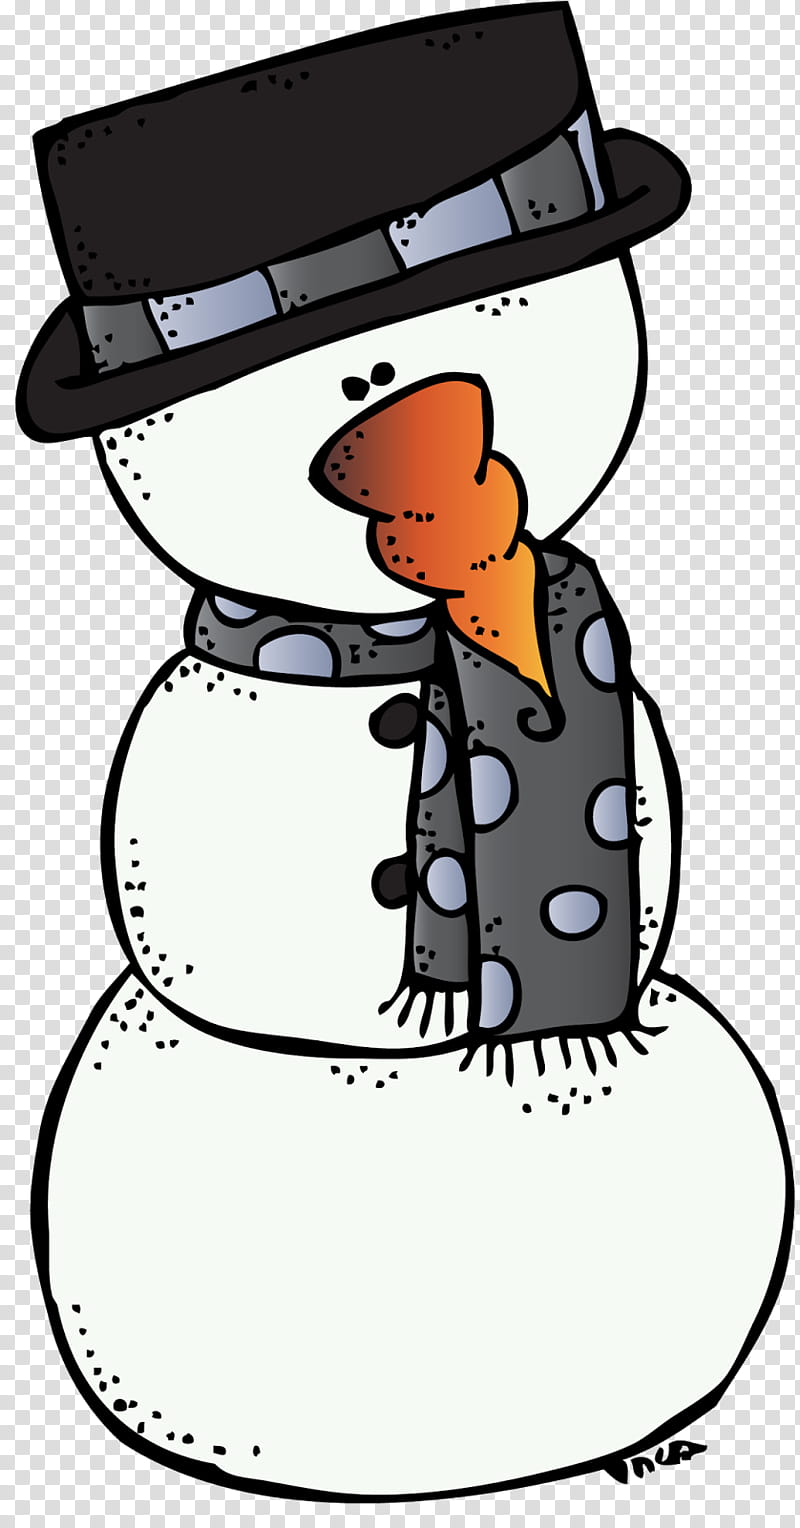 Teacher Day, Winter
, Snowman, Snowball Fight, Drawing, Headgear, Hat transparent background PNG clipart